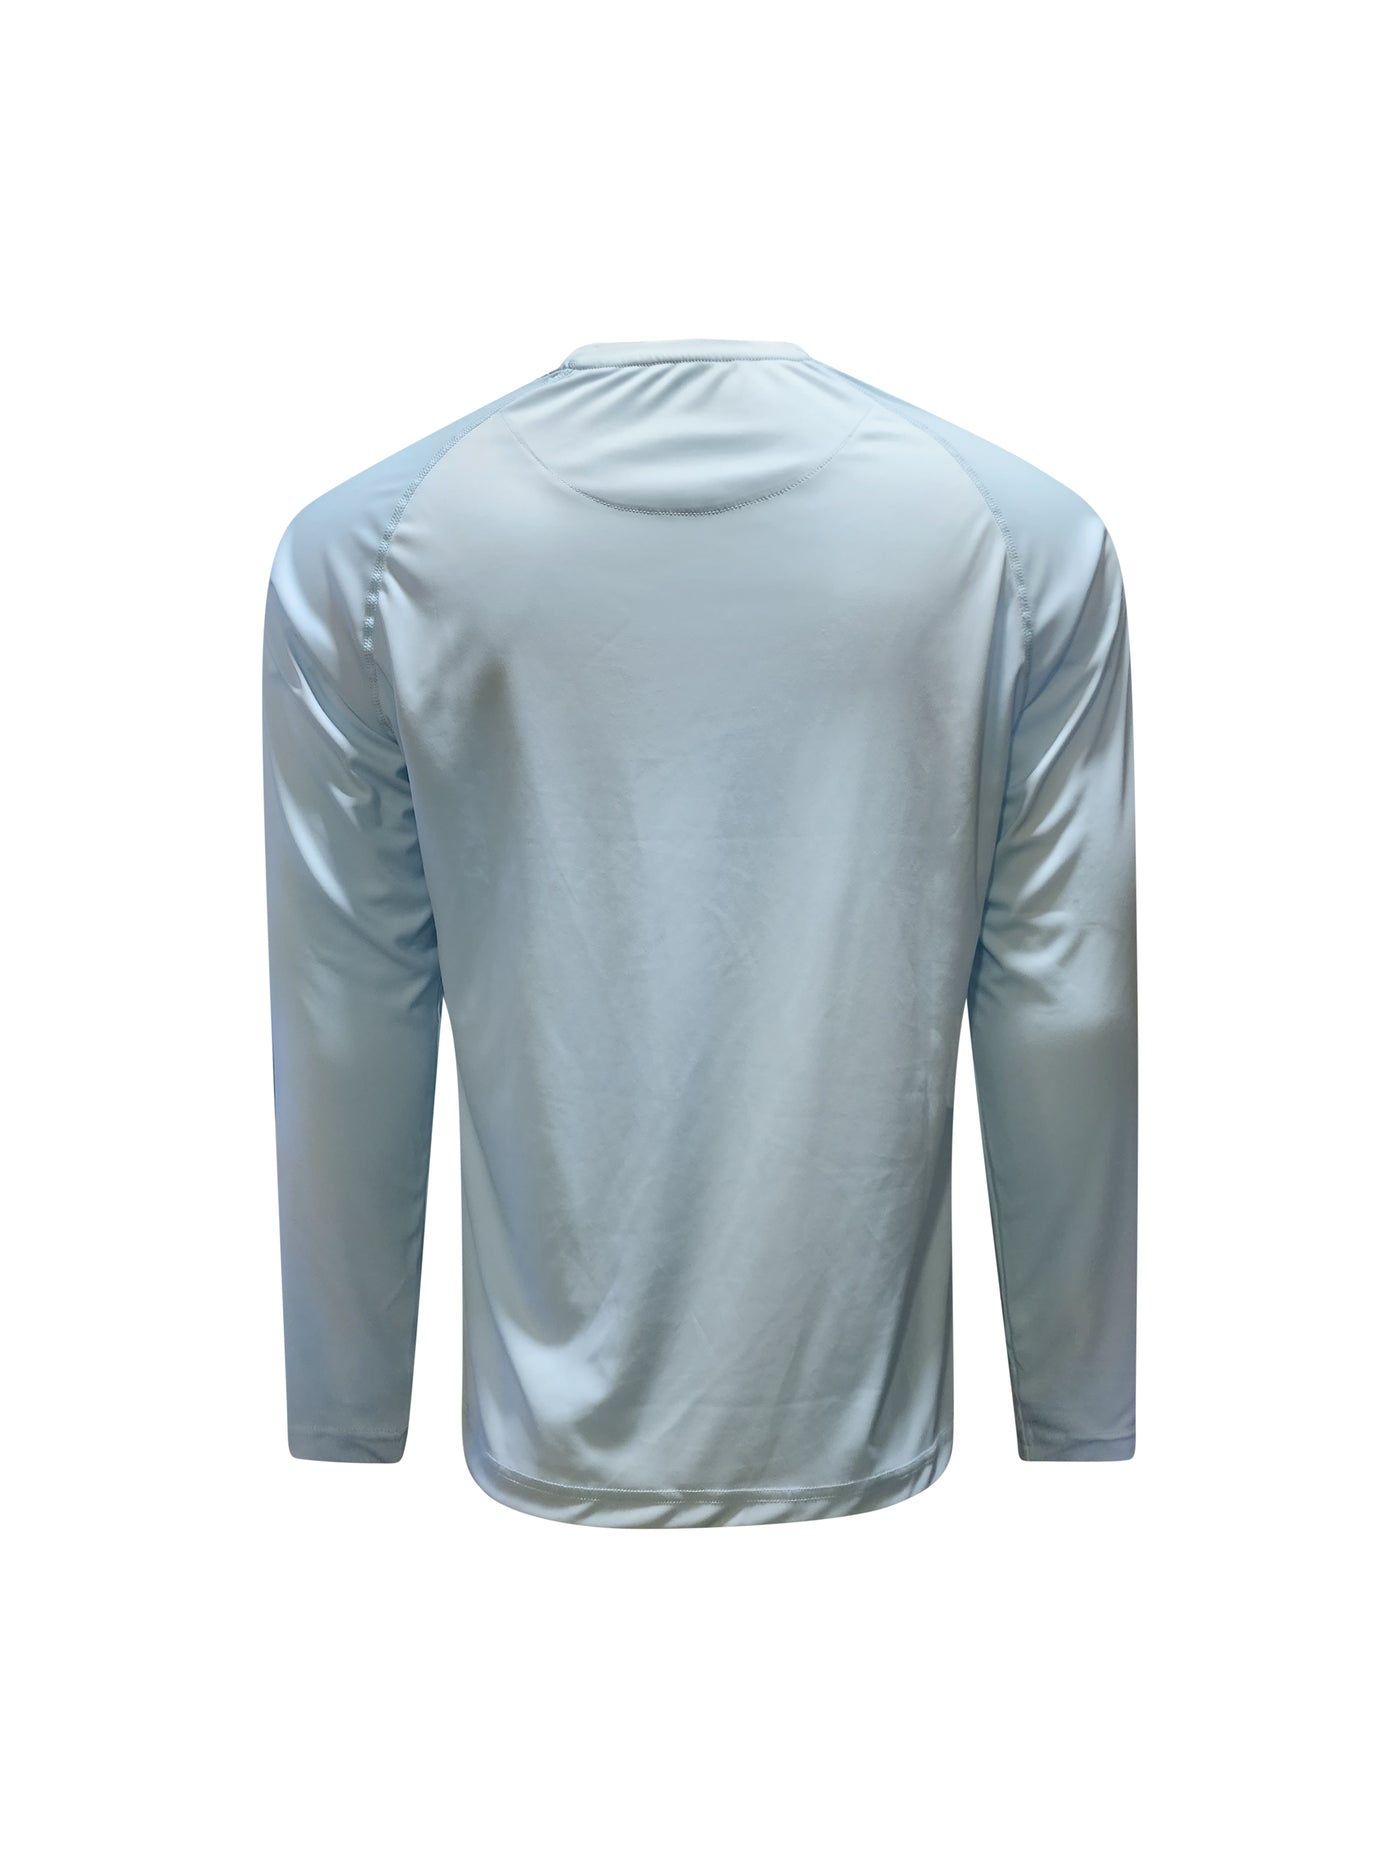 Splash - UPF 50 Long Sleeve Performance Gear Shirt S